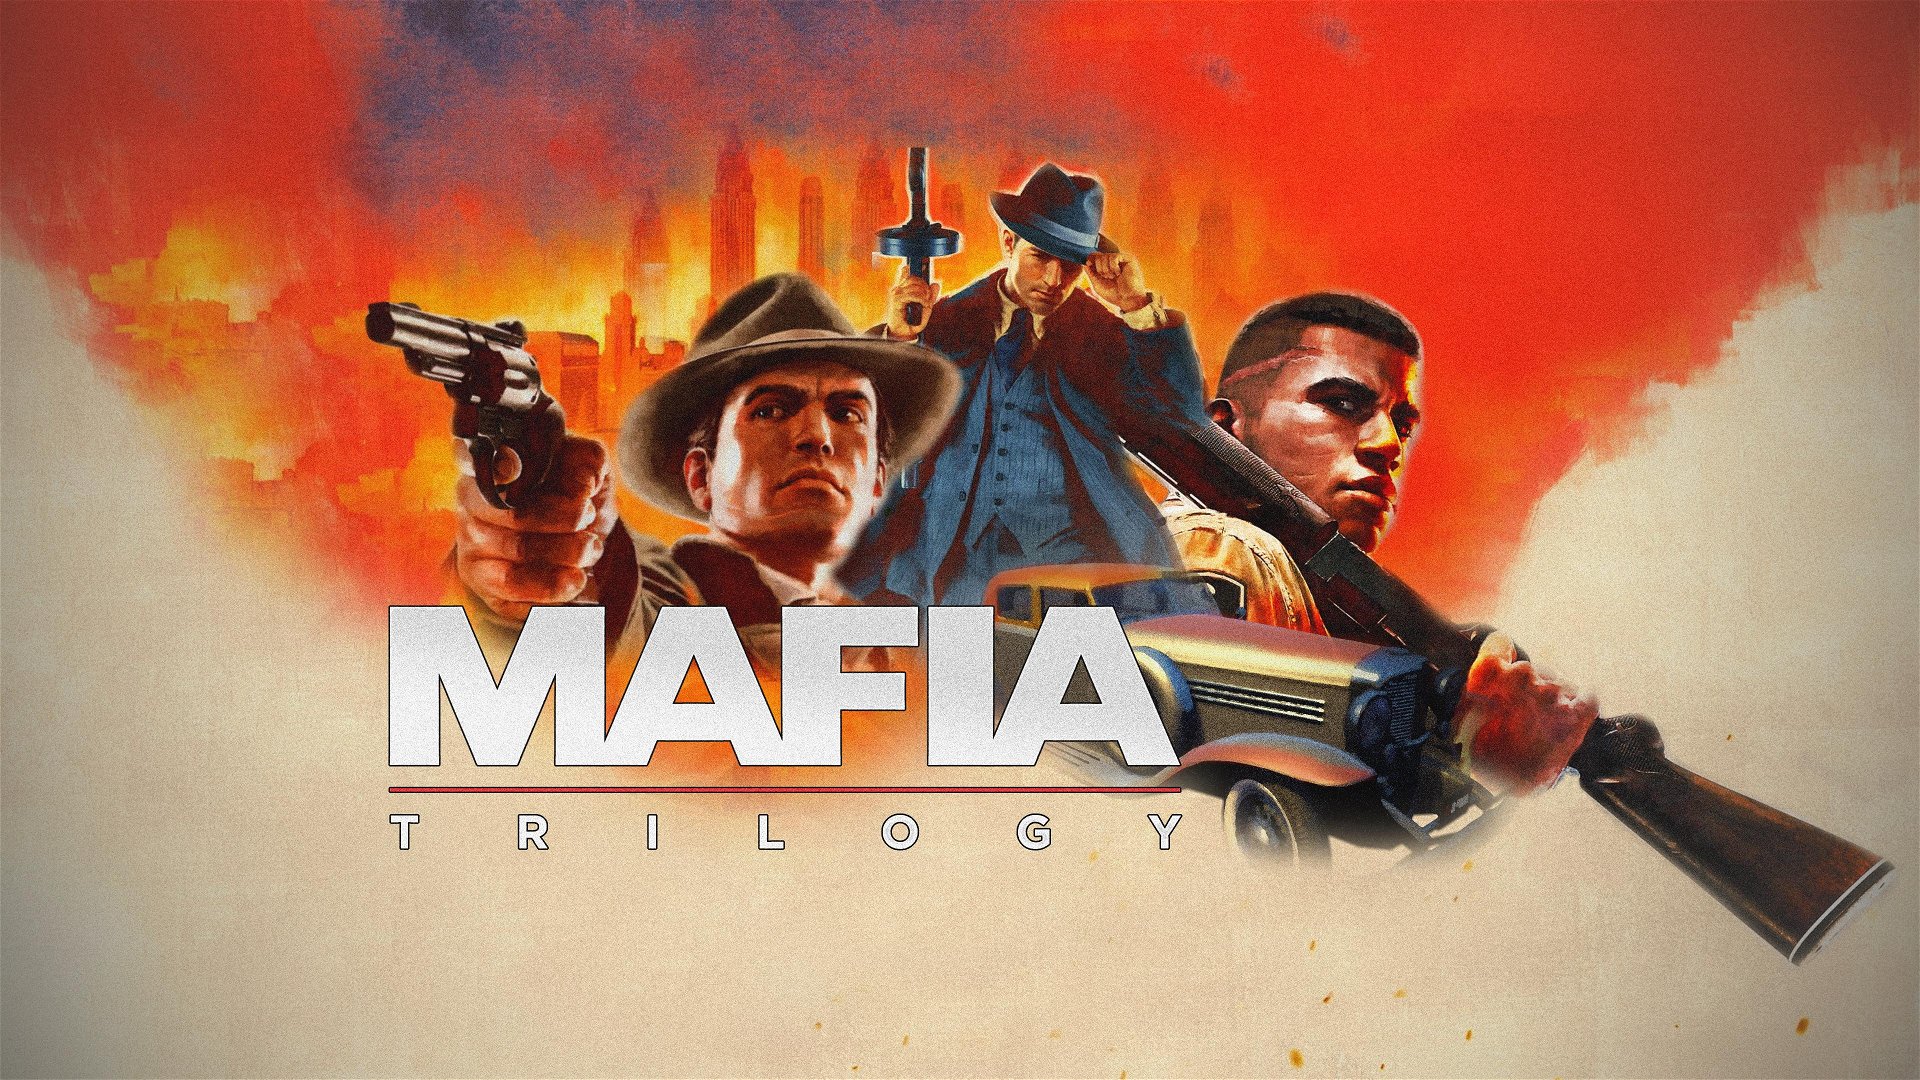 Mafia 3 definitive edition. Мафия 3 / Mafia III: Definitive Edition. Мафия игра трилогия. Мафия 3 Дефинитив эдишн. Mafia Trilogy Постер.